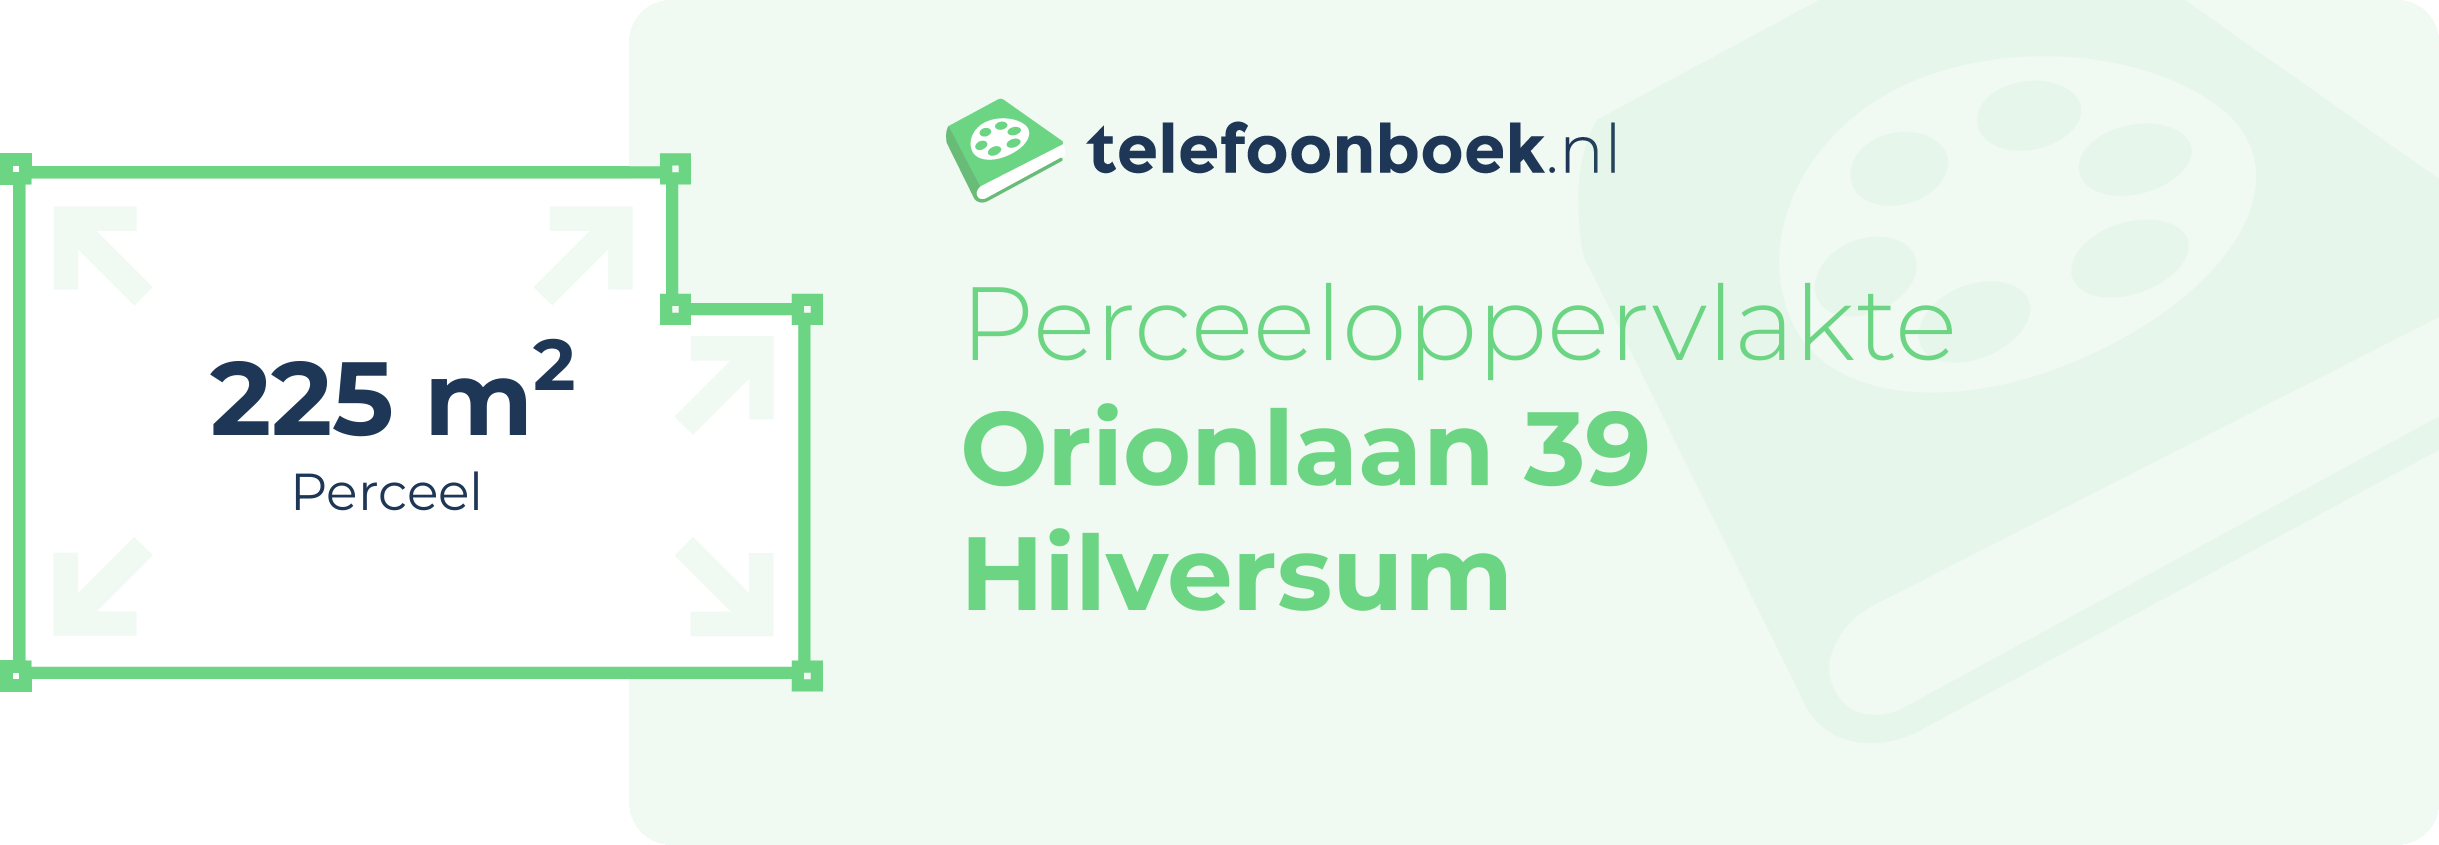 Perceeloppervlakte Orionlaan 39 Hilversum